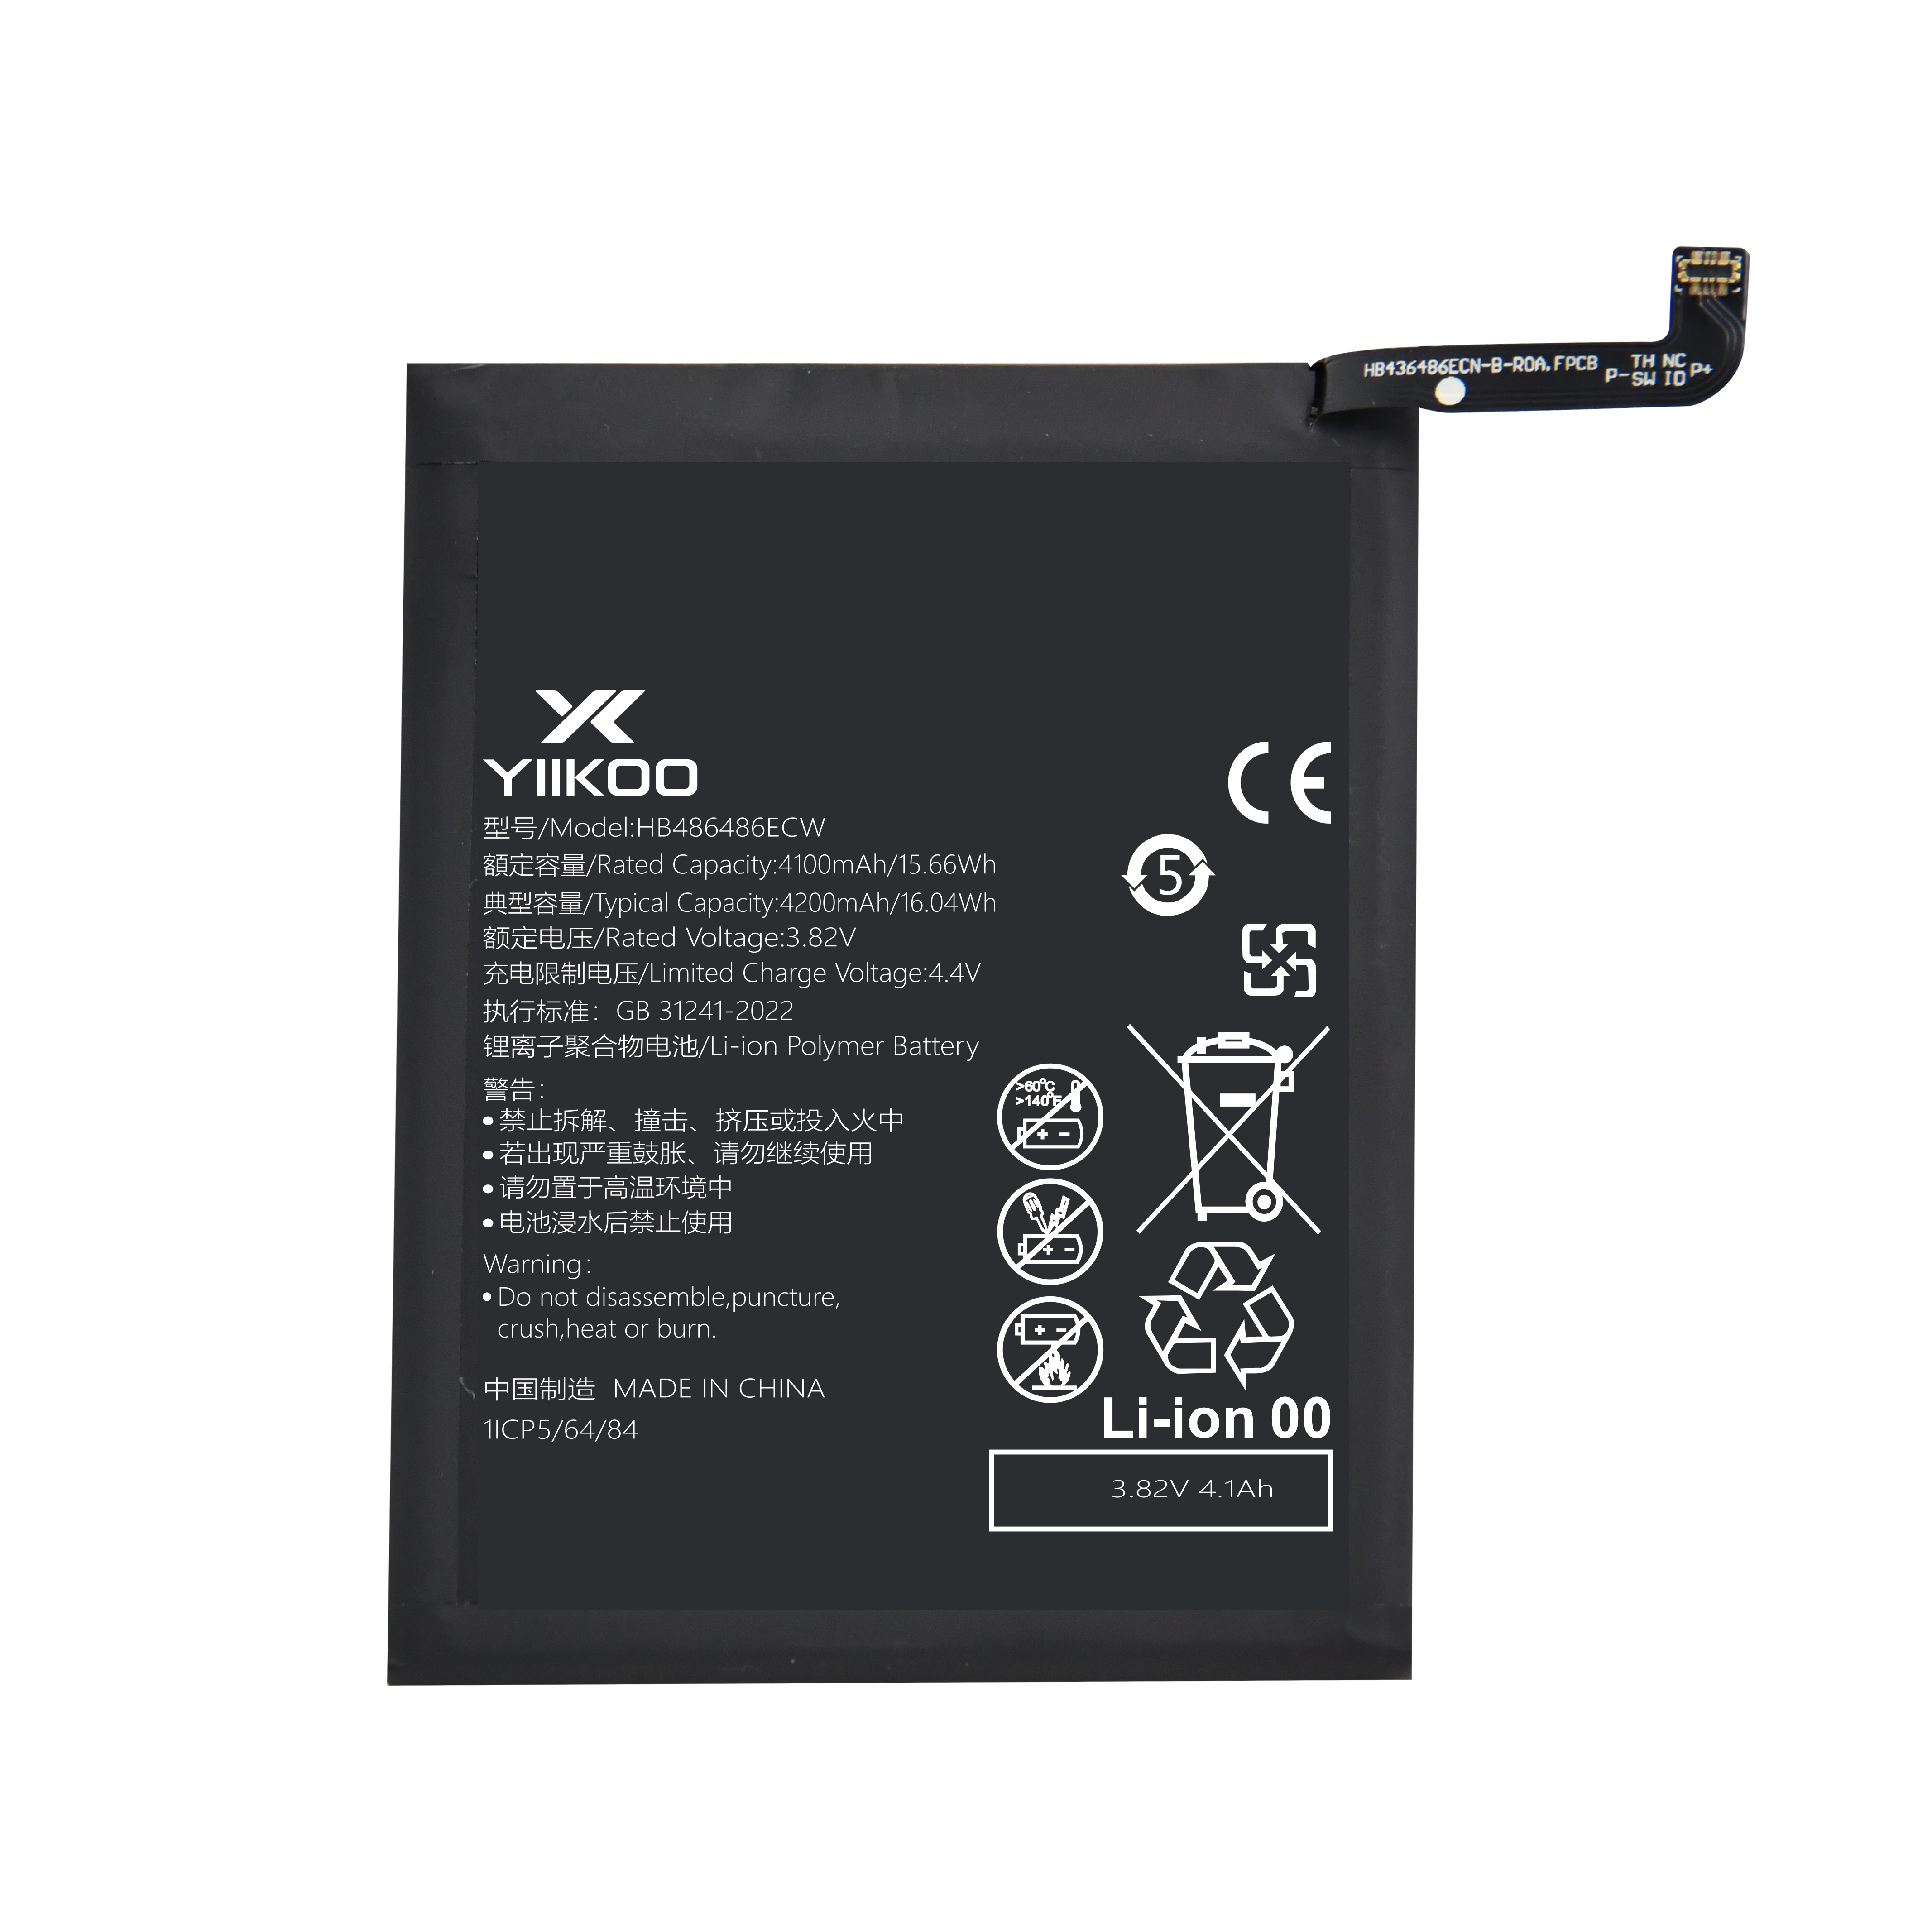 Huawei P30 pro/mate20pro/Mate20X 5G batteri (4100mAh) HB486486ECW